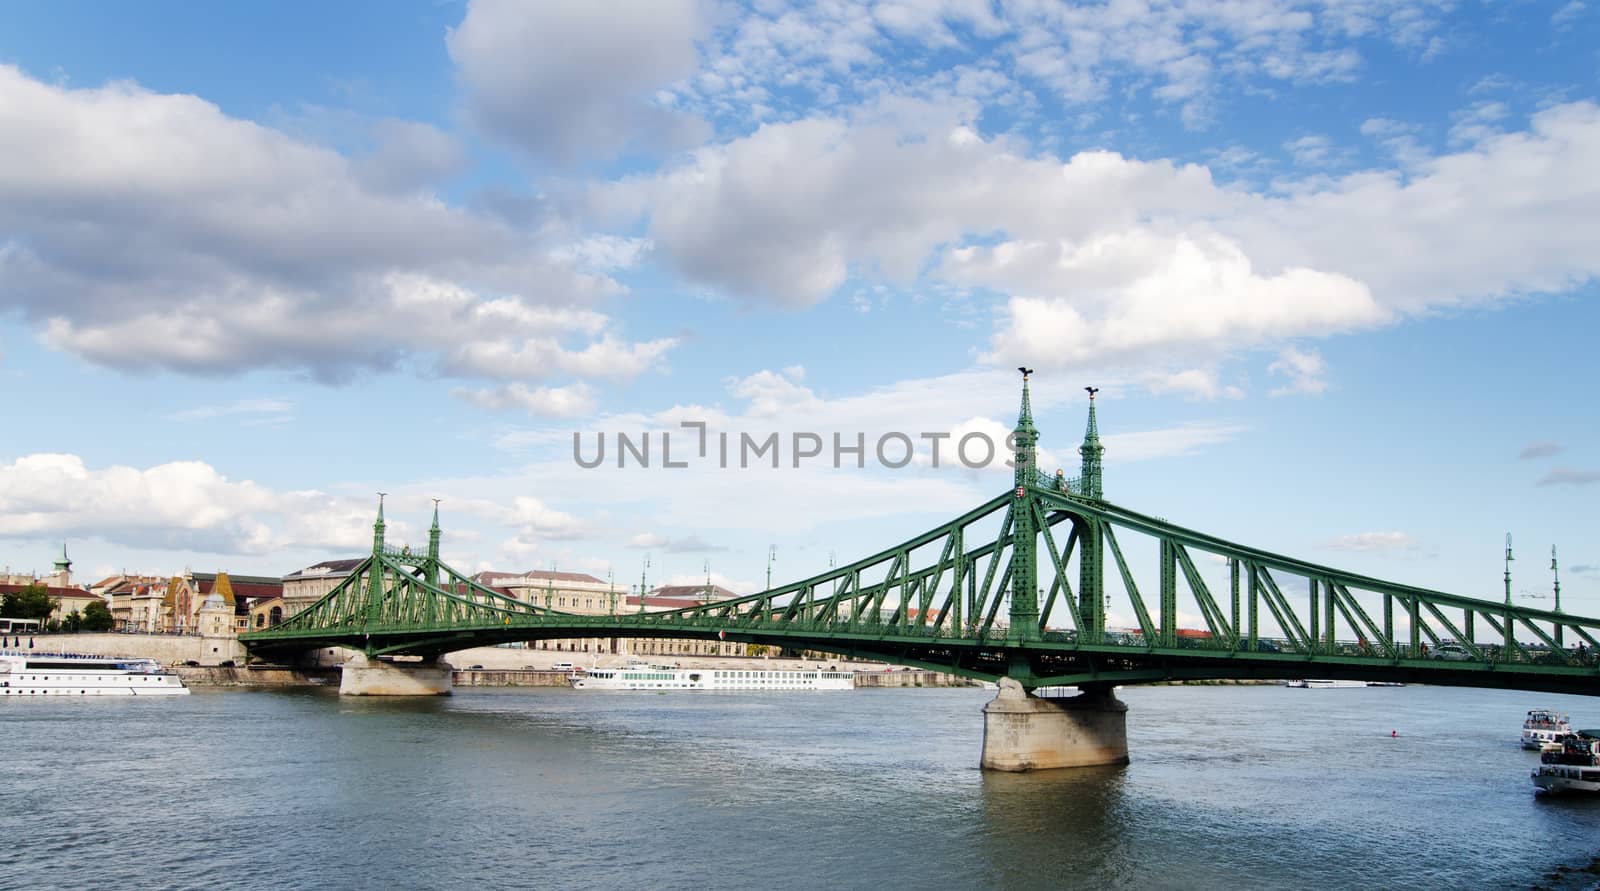 Szabadsag hid - Liberty bridge in Budapest, Hungary